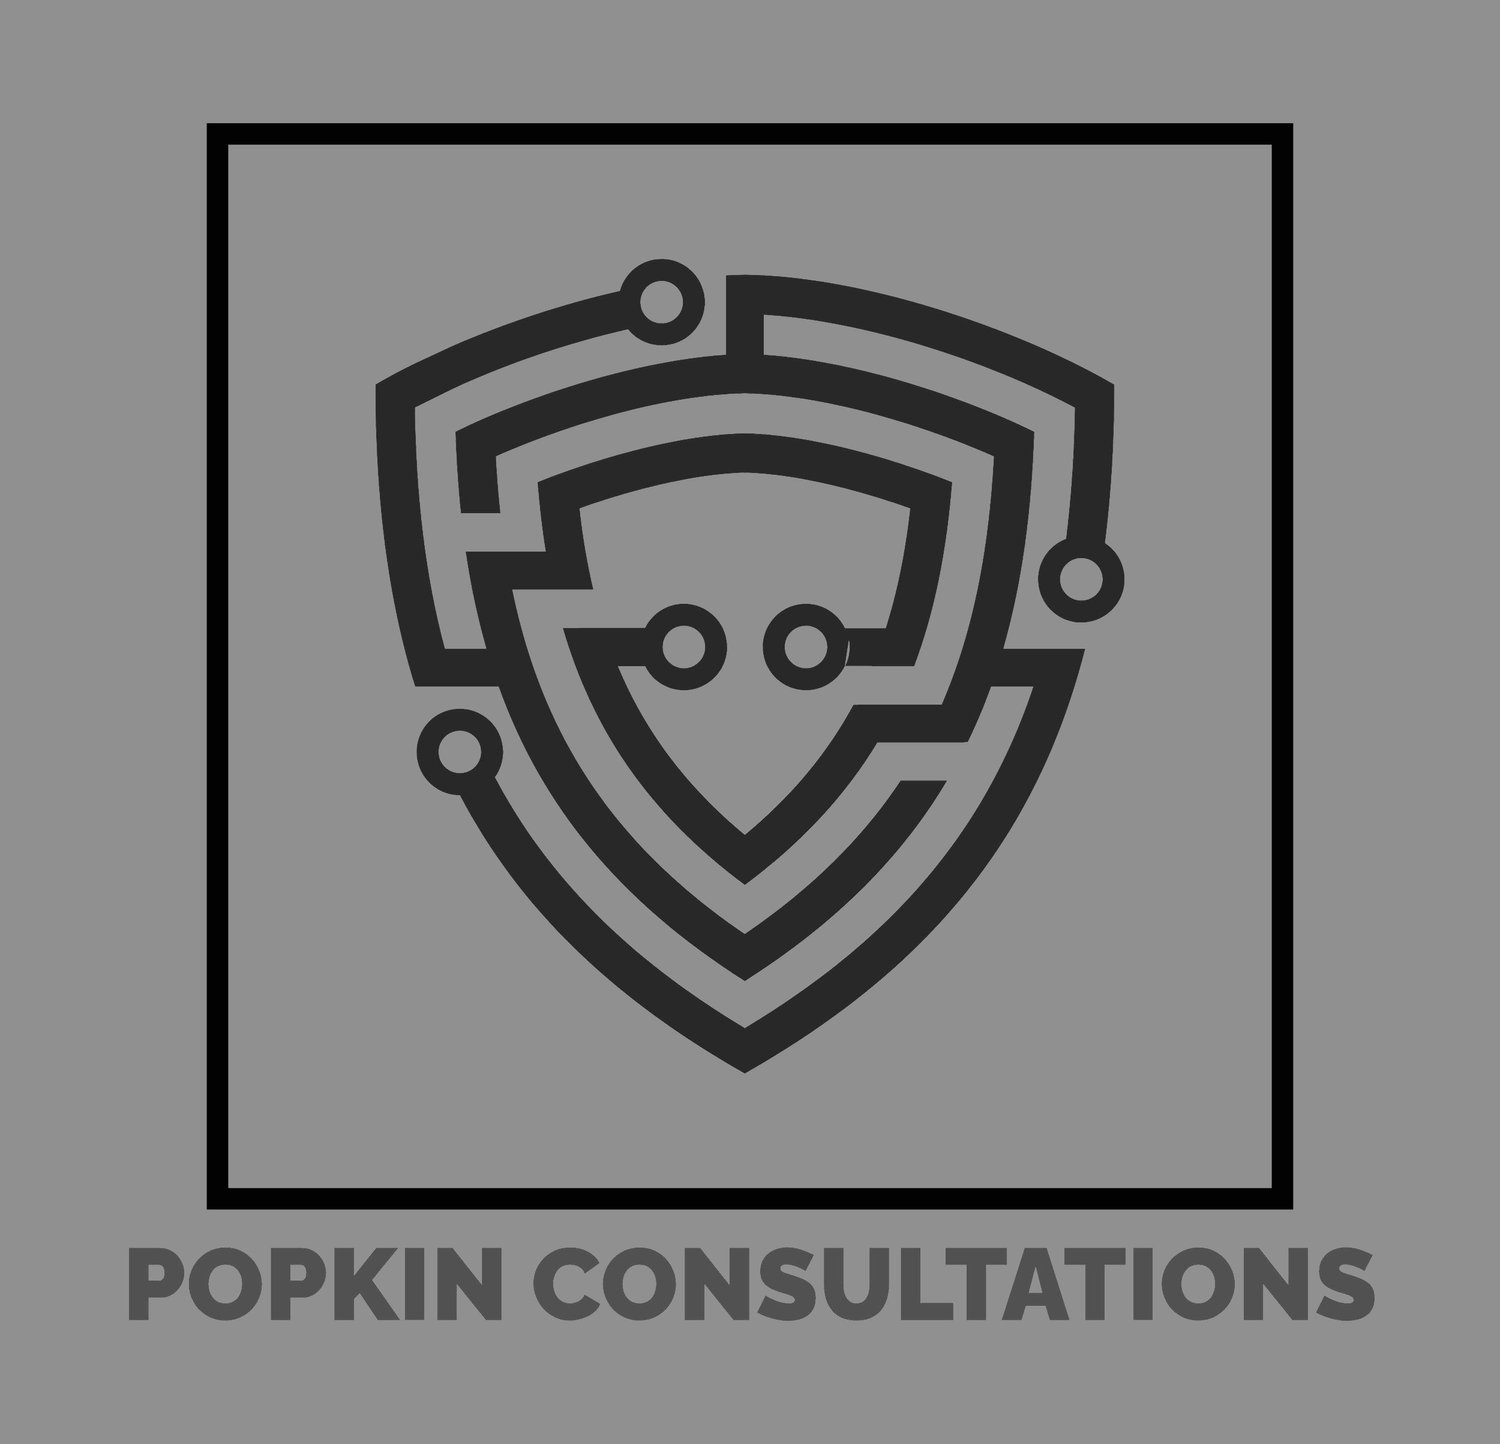 Popkin Consultations